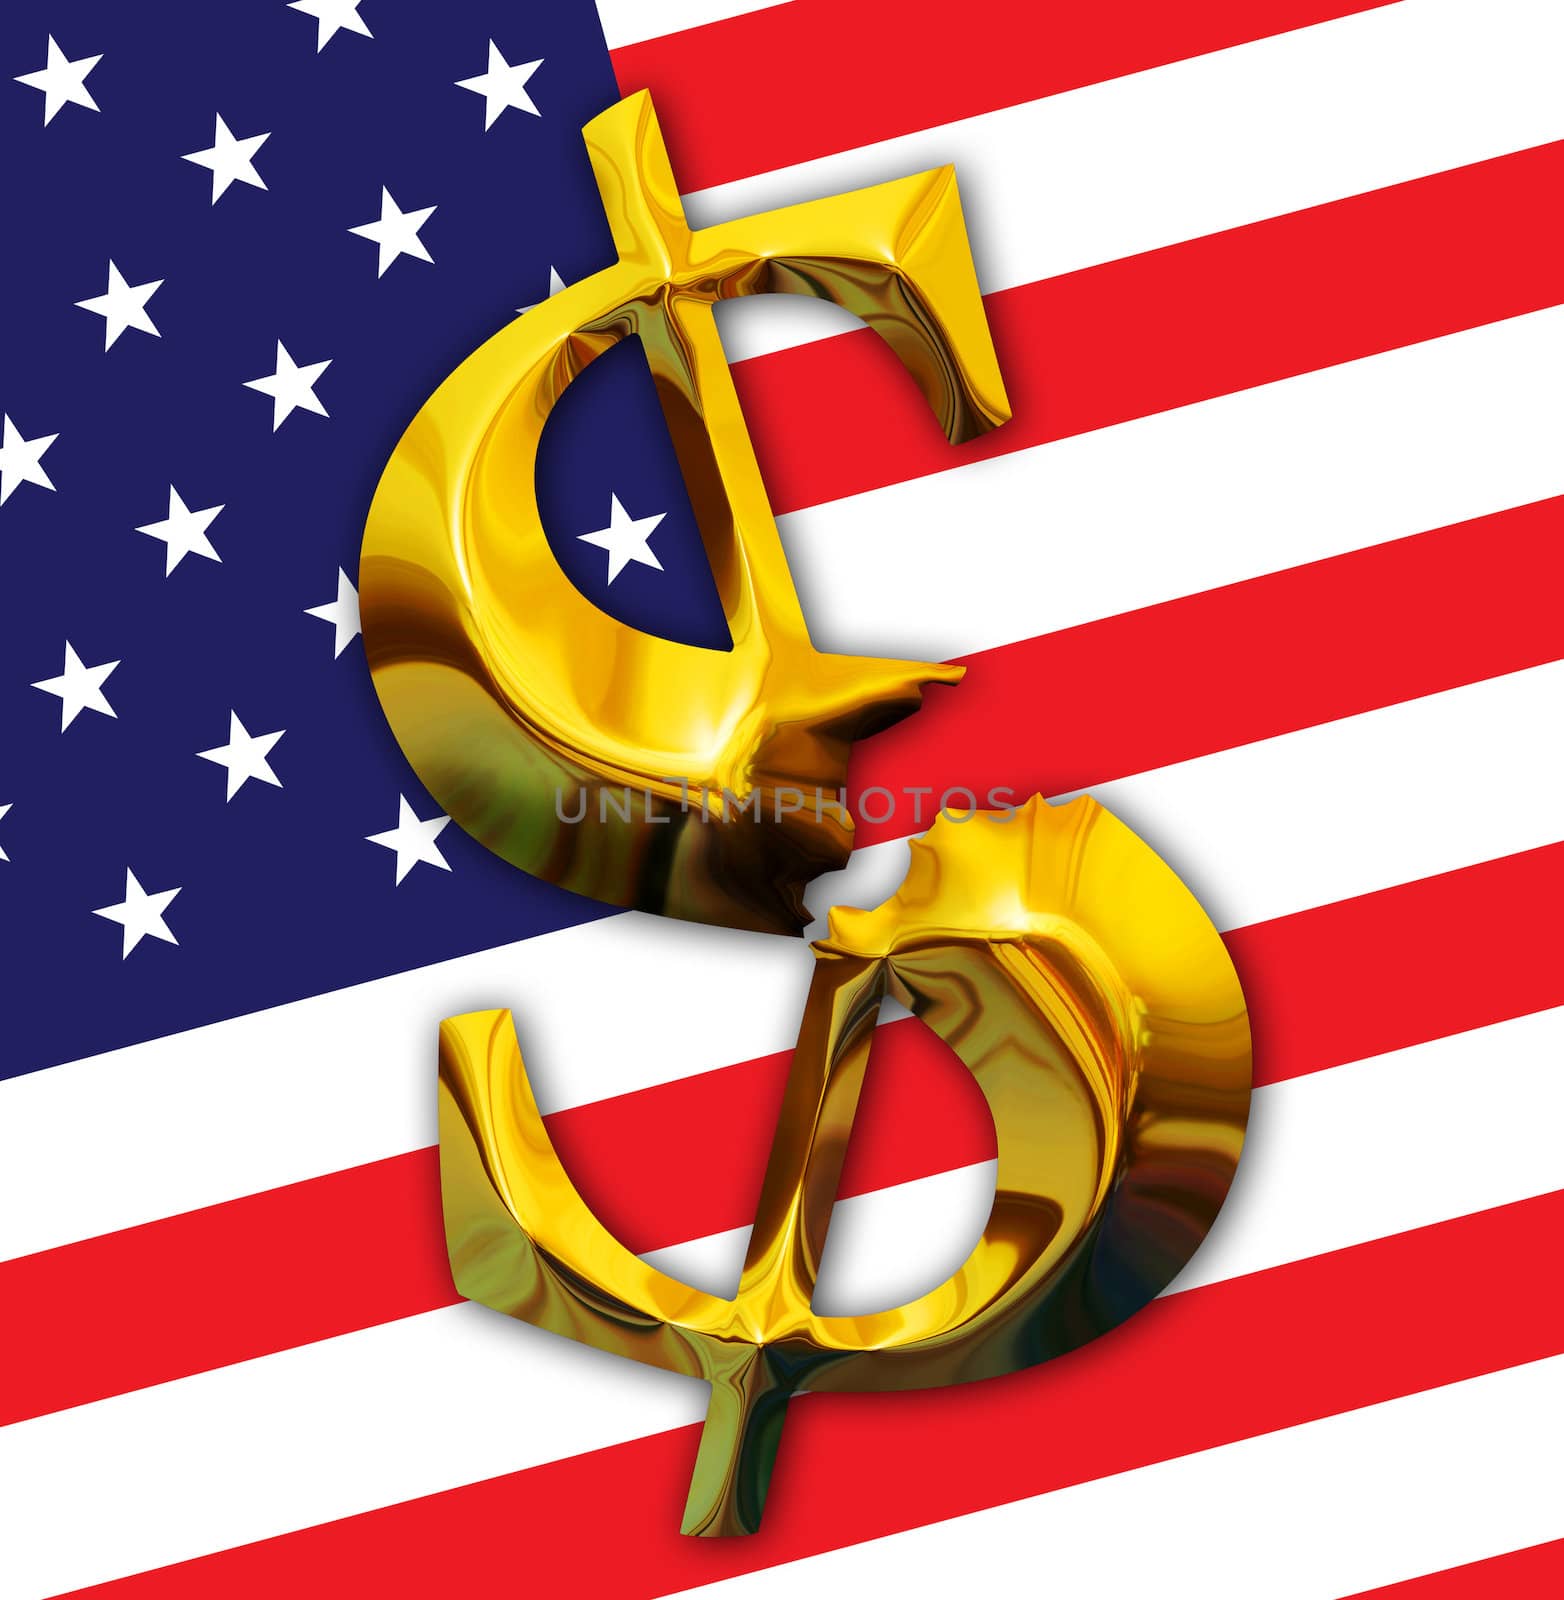  Broken gold dollar on American flag background by palinchak